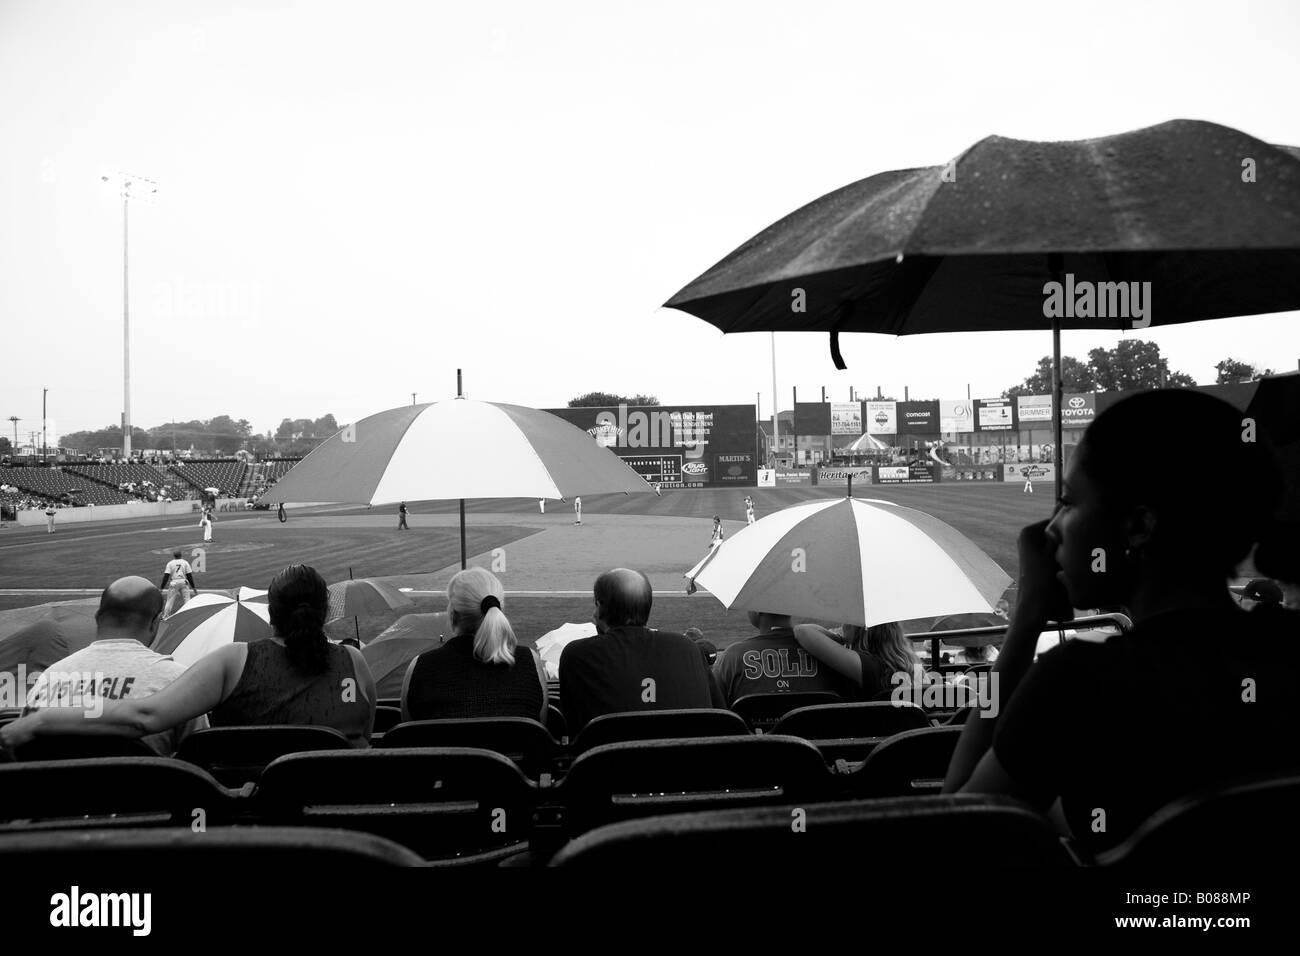 Baseball-Fans mit Sonnenschirmen im Regen an der staduim Stockfoto